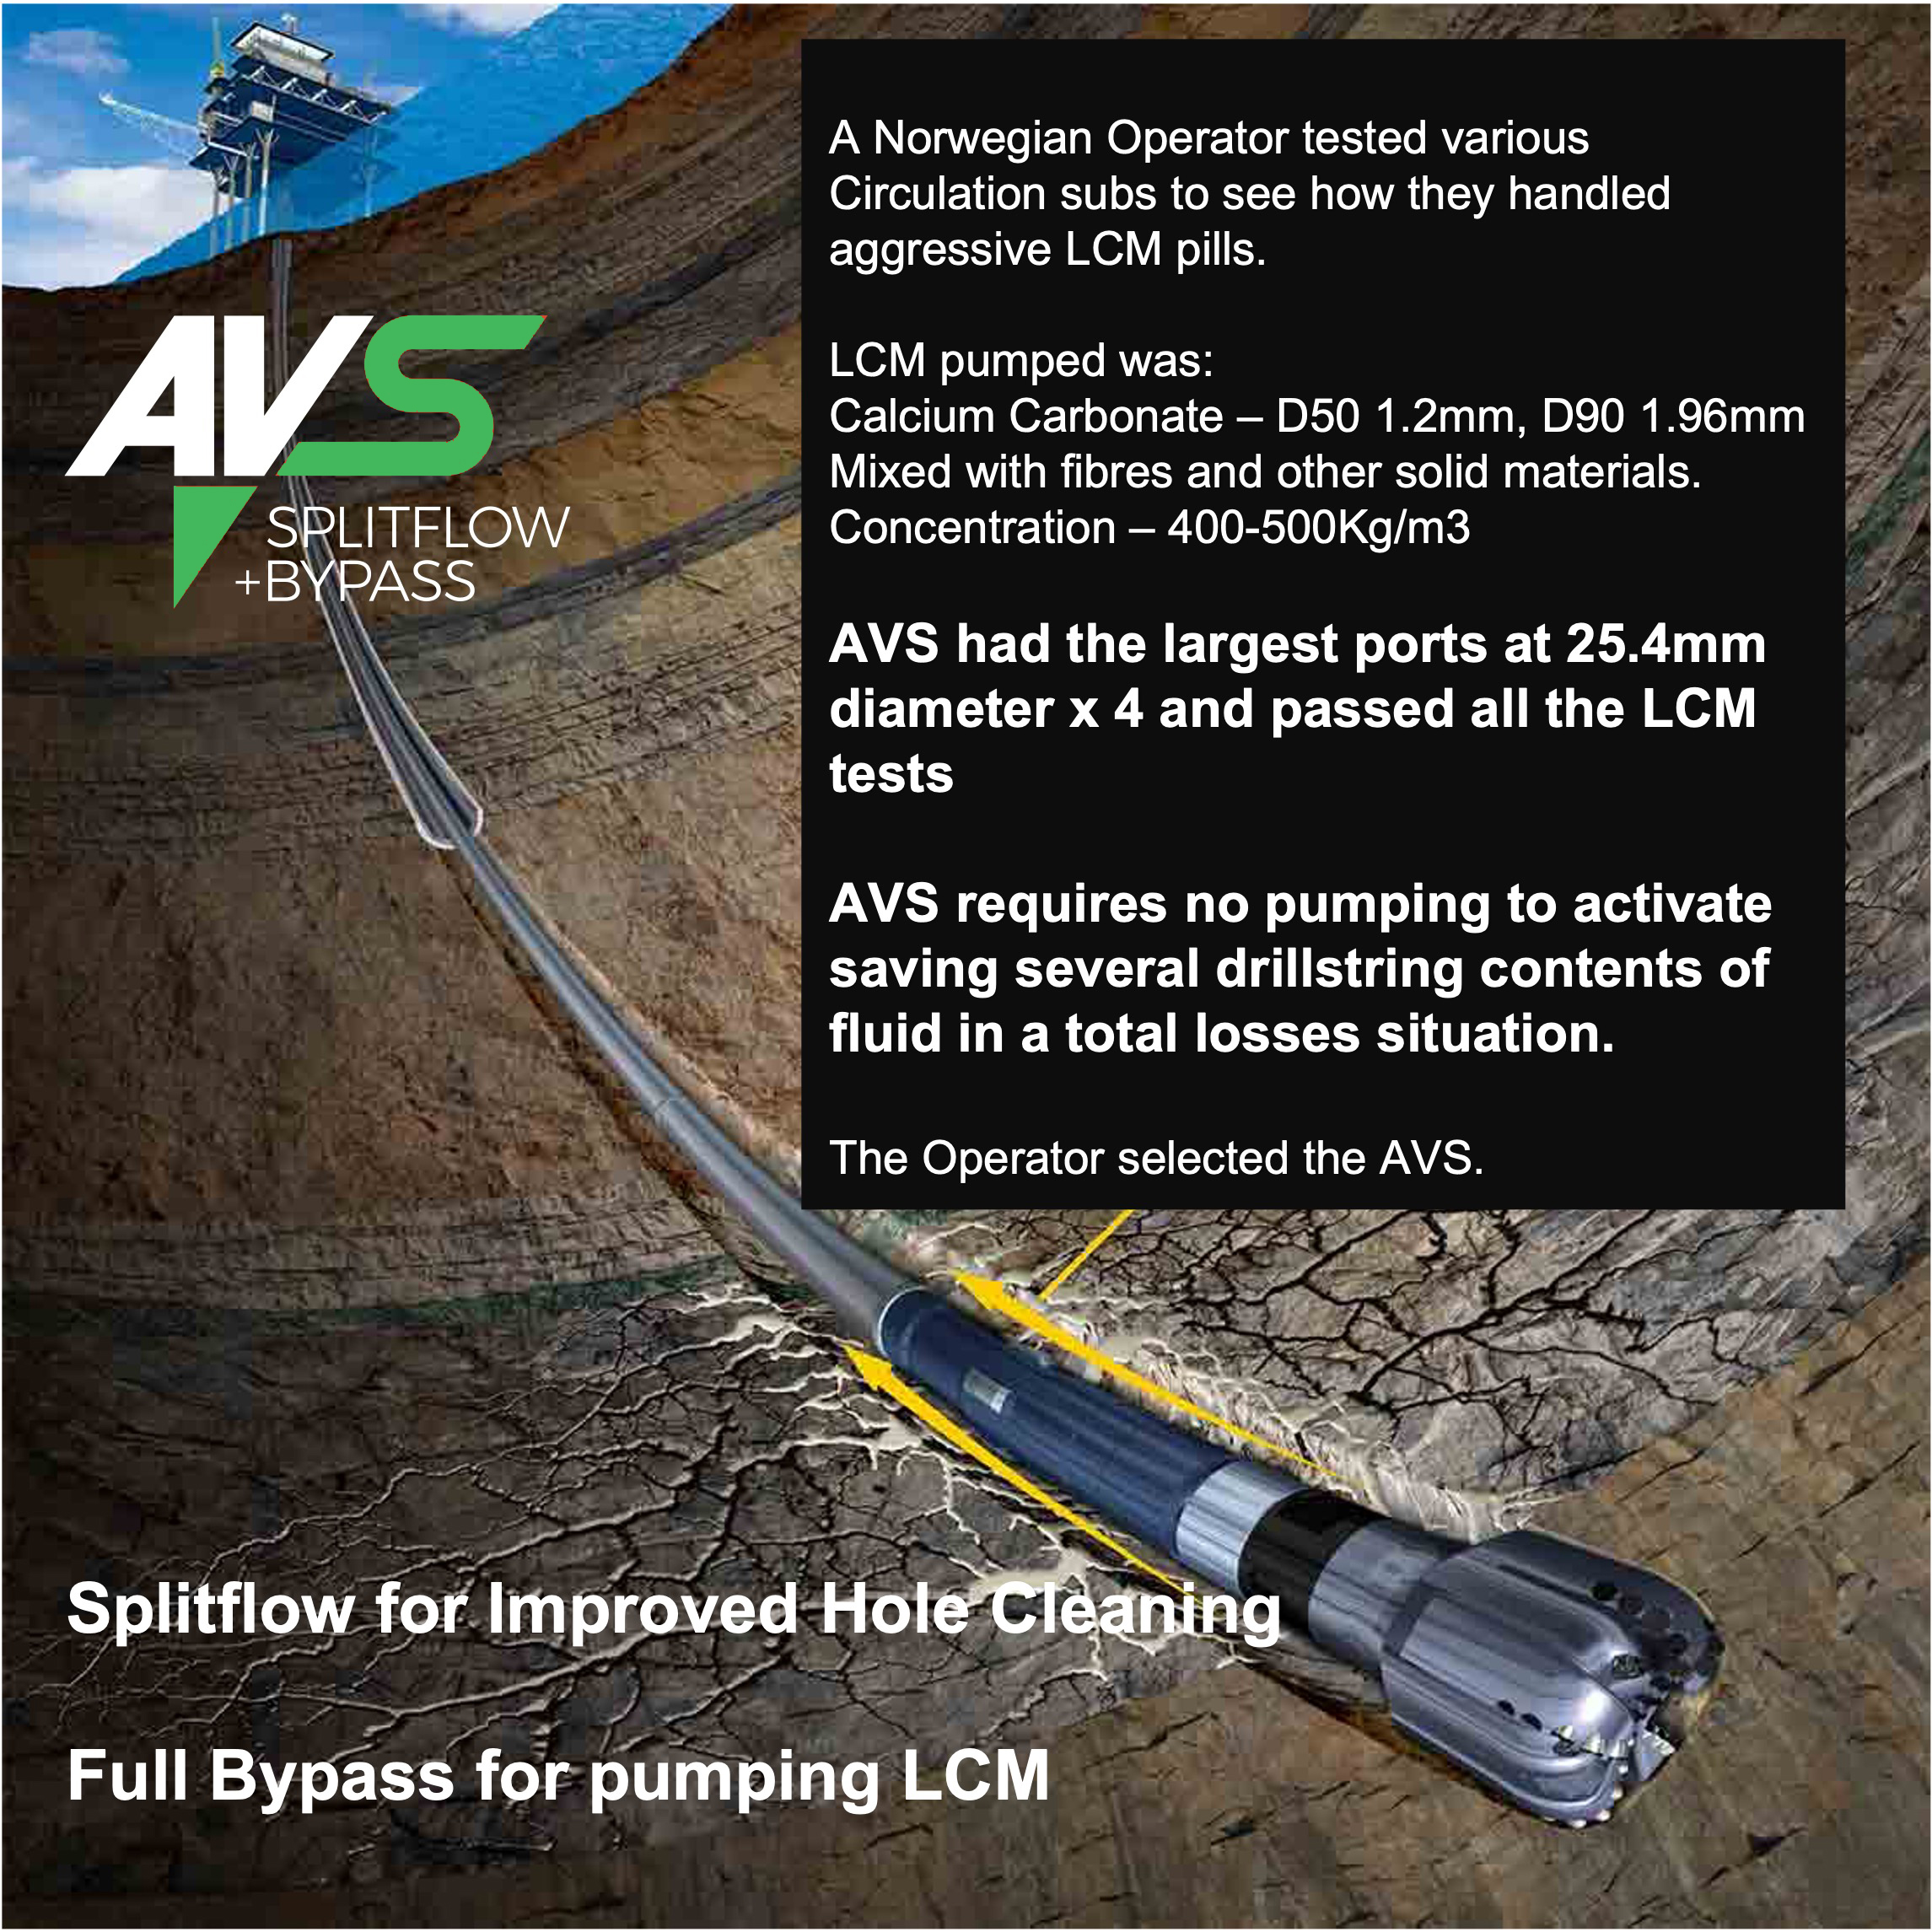 AVS passes AkerBP LCM pumping tests at Xrig in Norway.